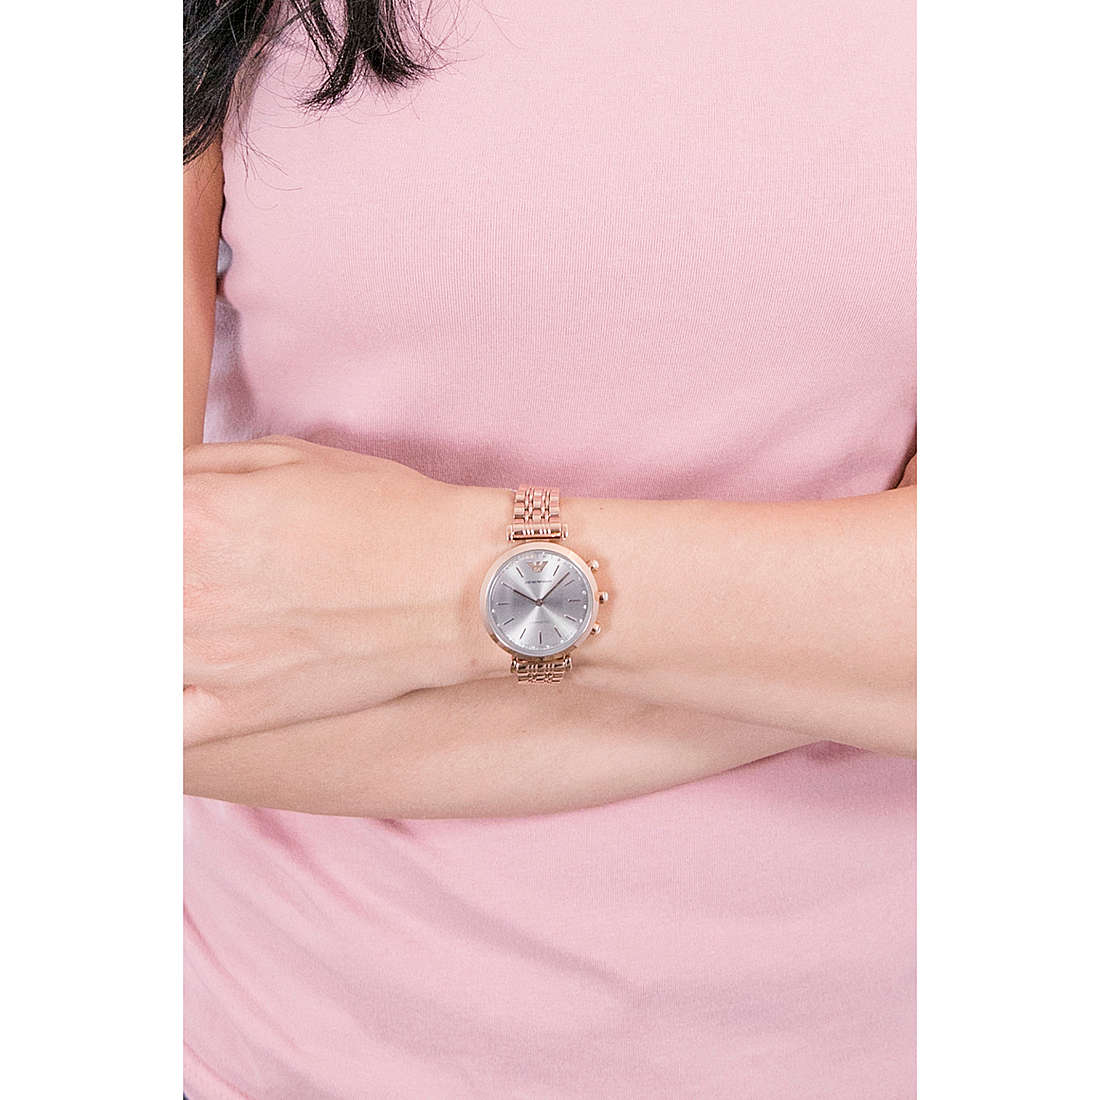 Emporio Armani Smartwatches donna ART3026 indosso